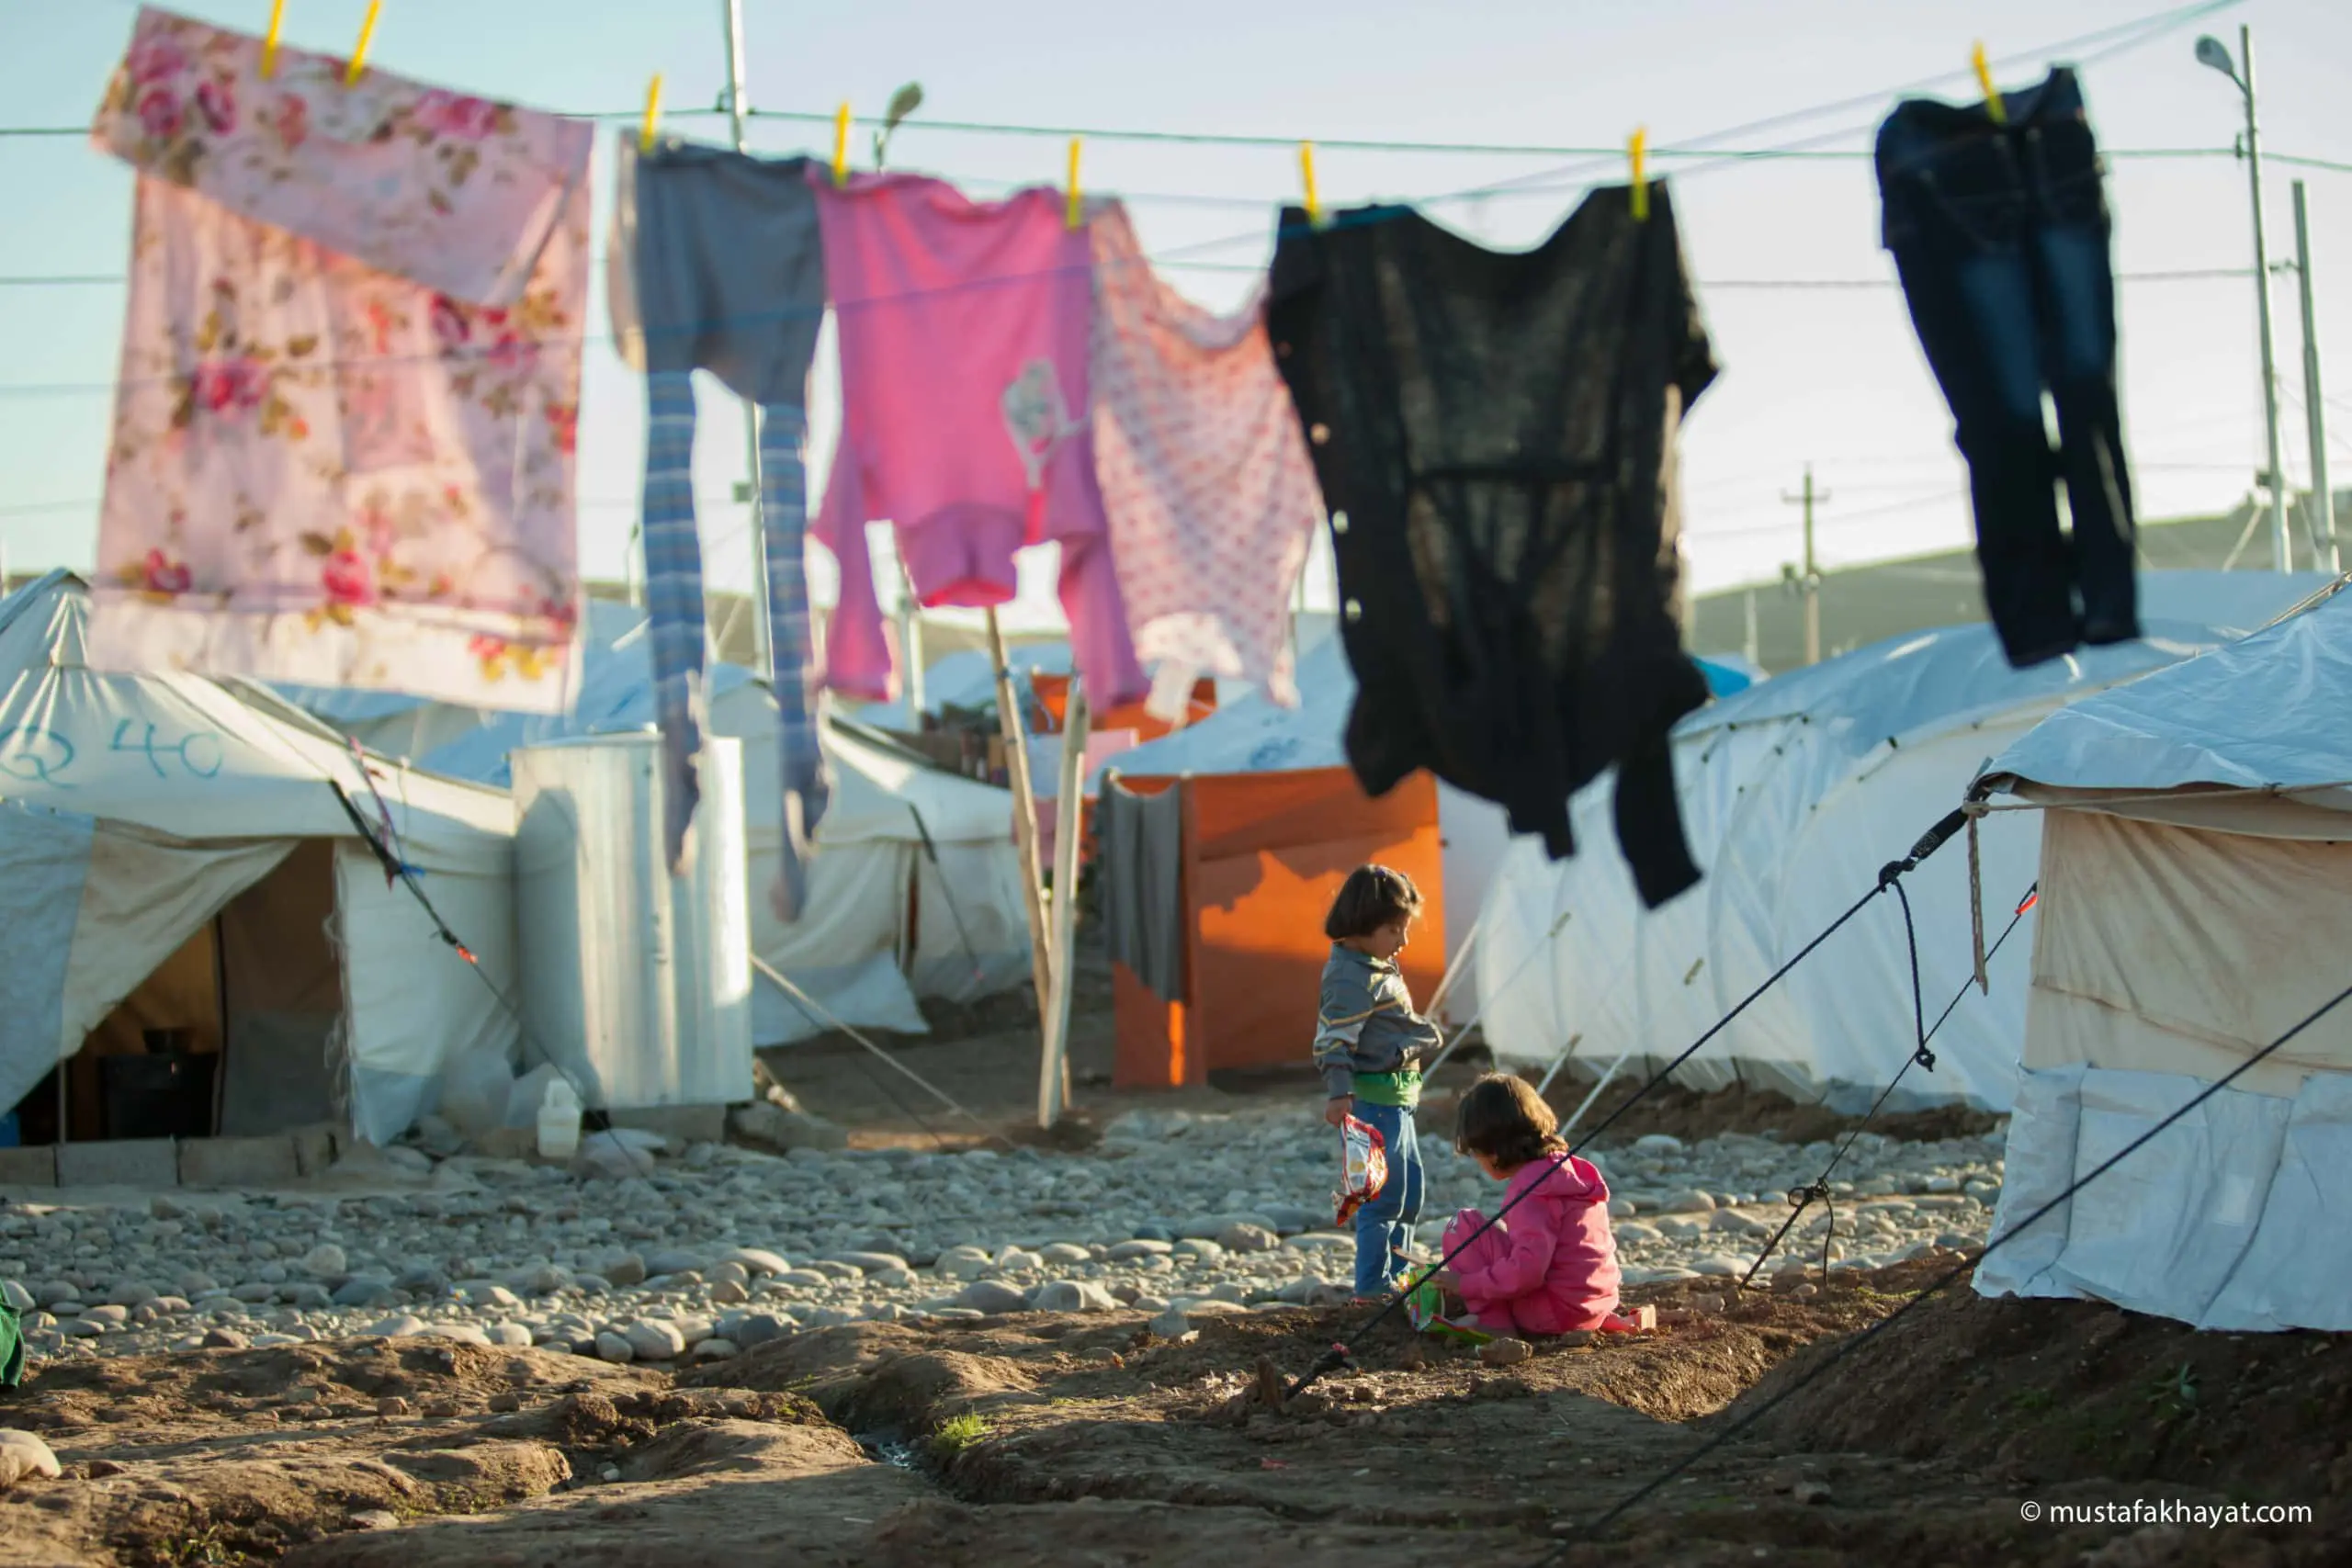 L’odissea umanitaria dei profughi siriani: quali prospettive